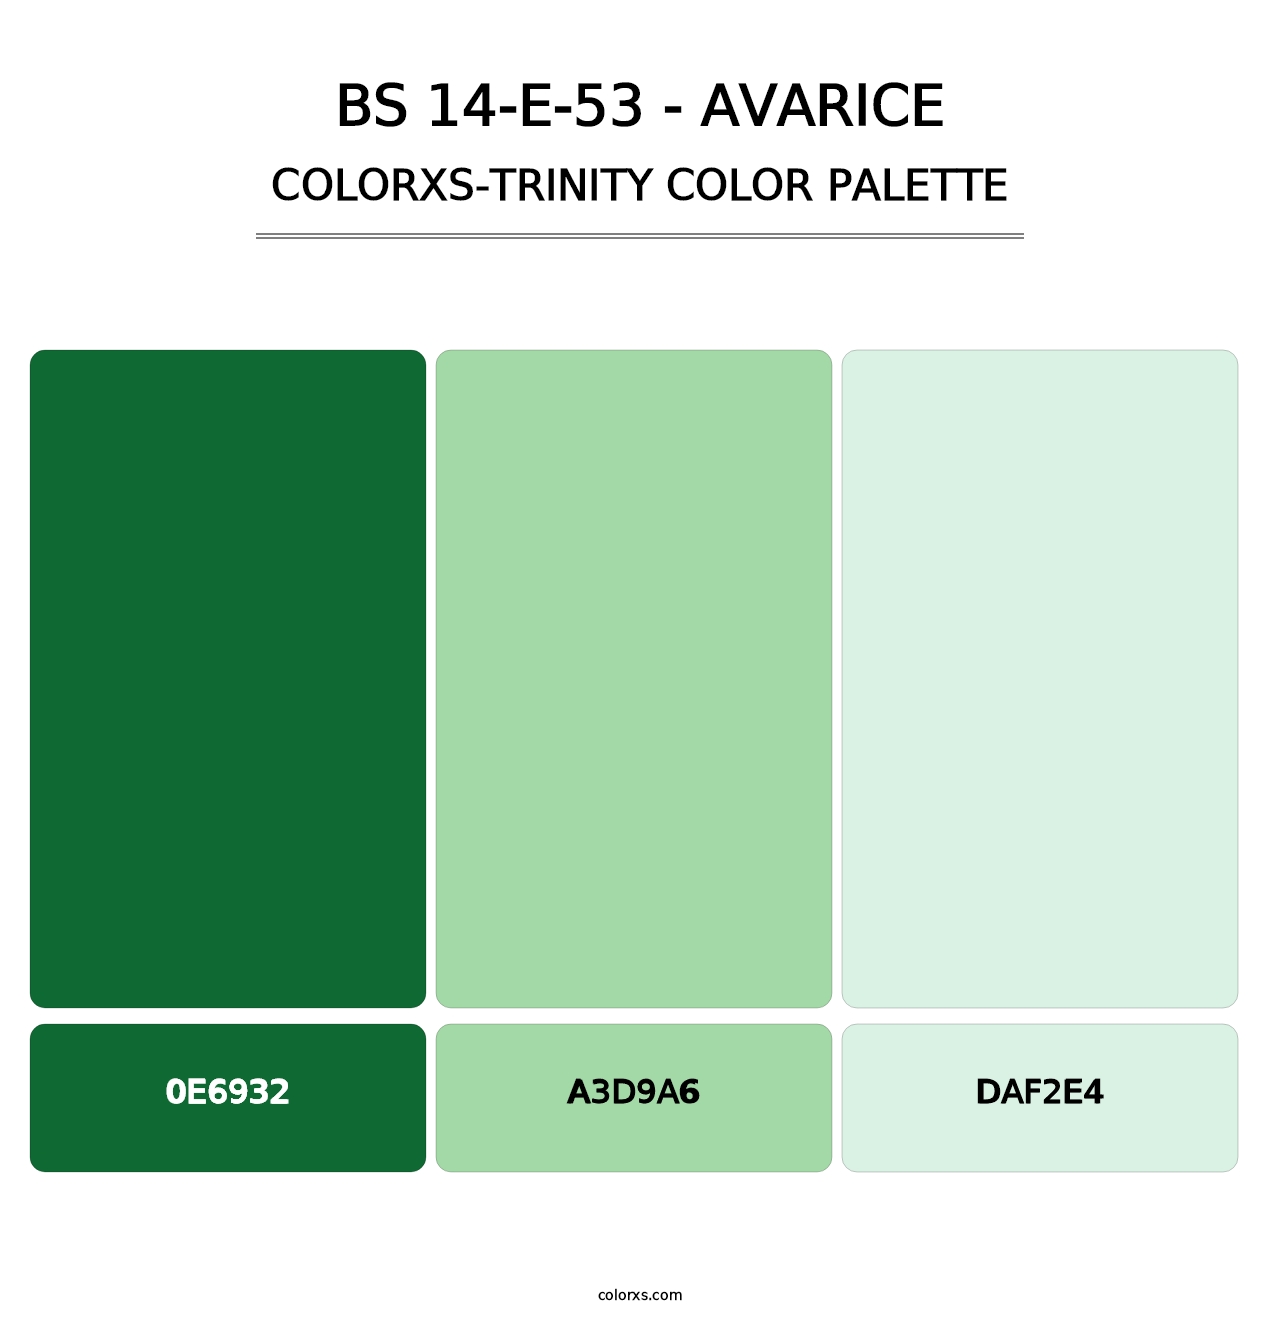 BS 14-E-53 - Avarice - Colorxs Trinity Palette